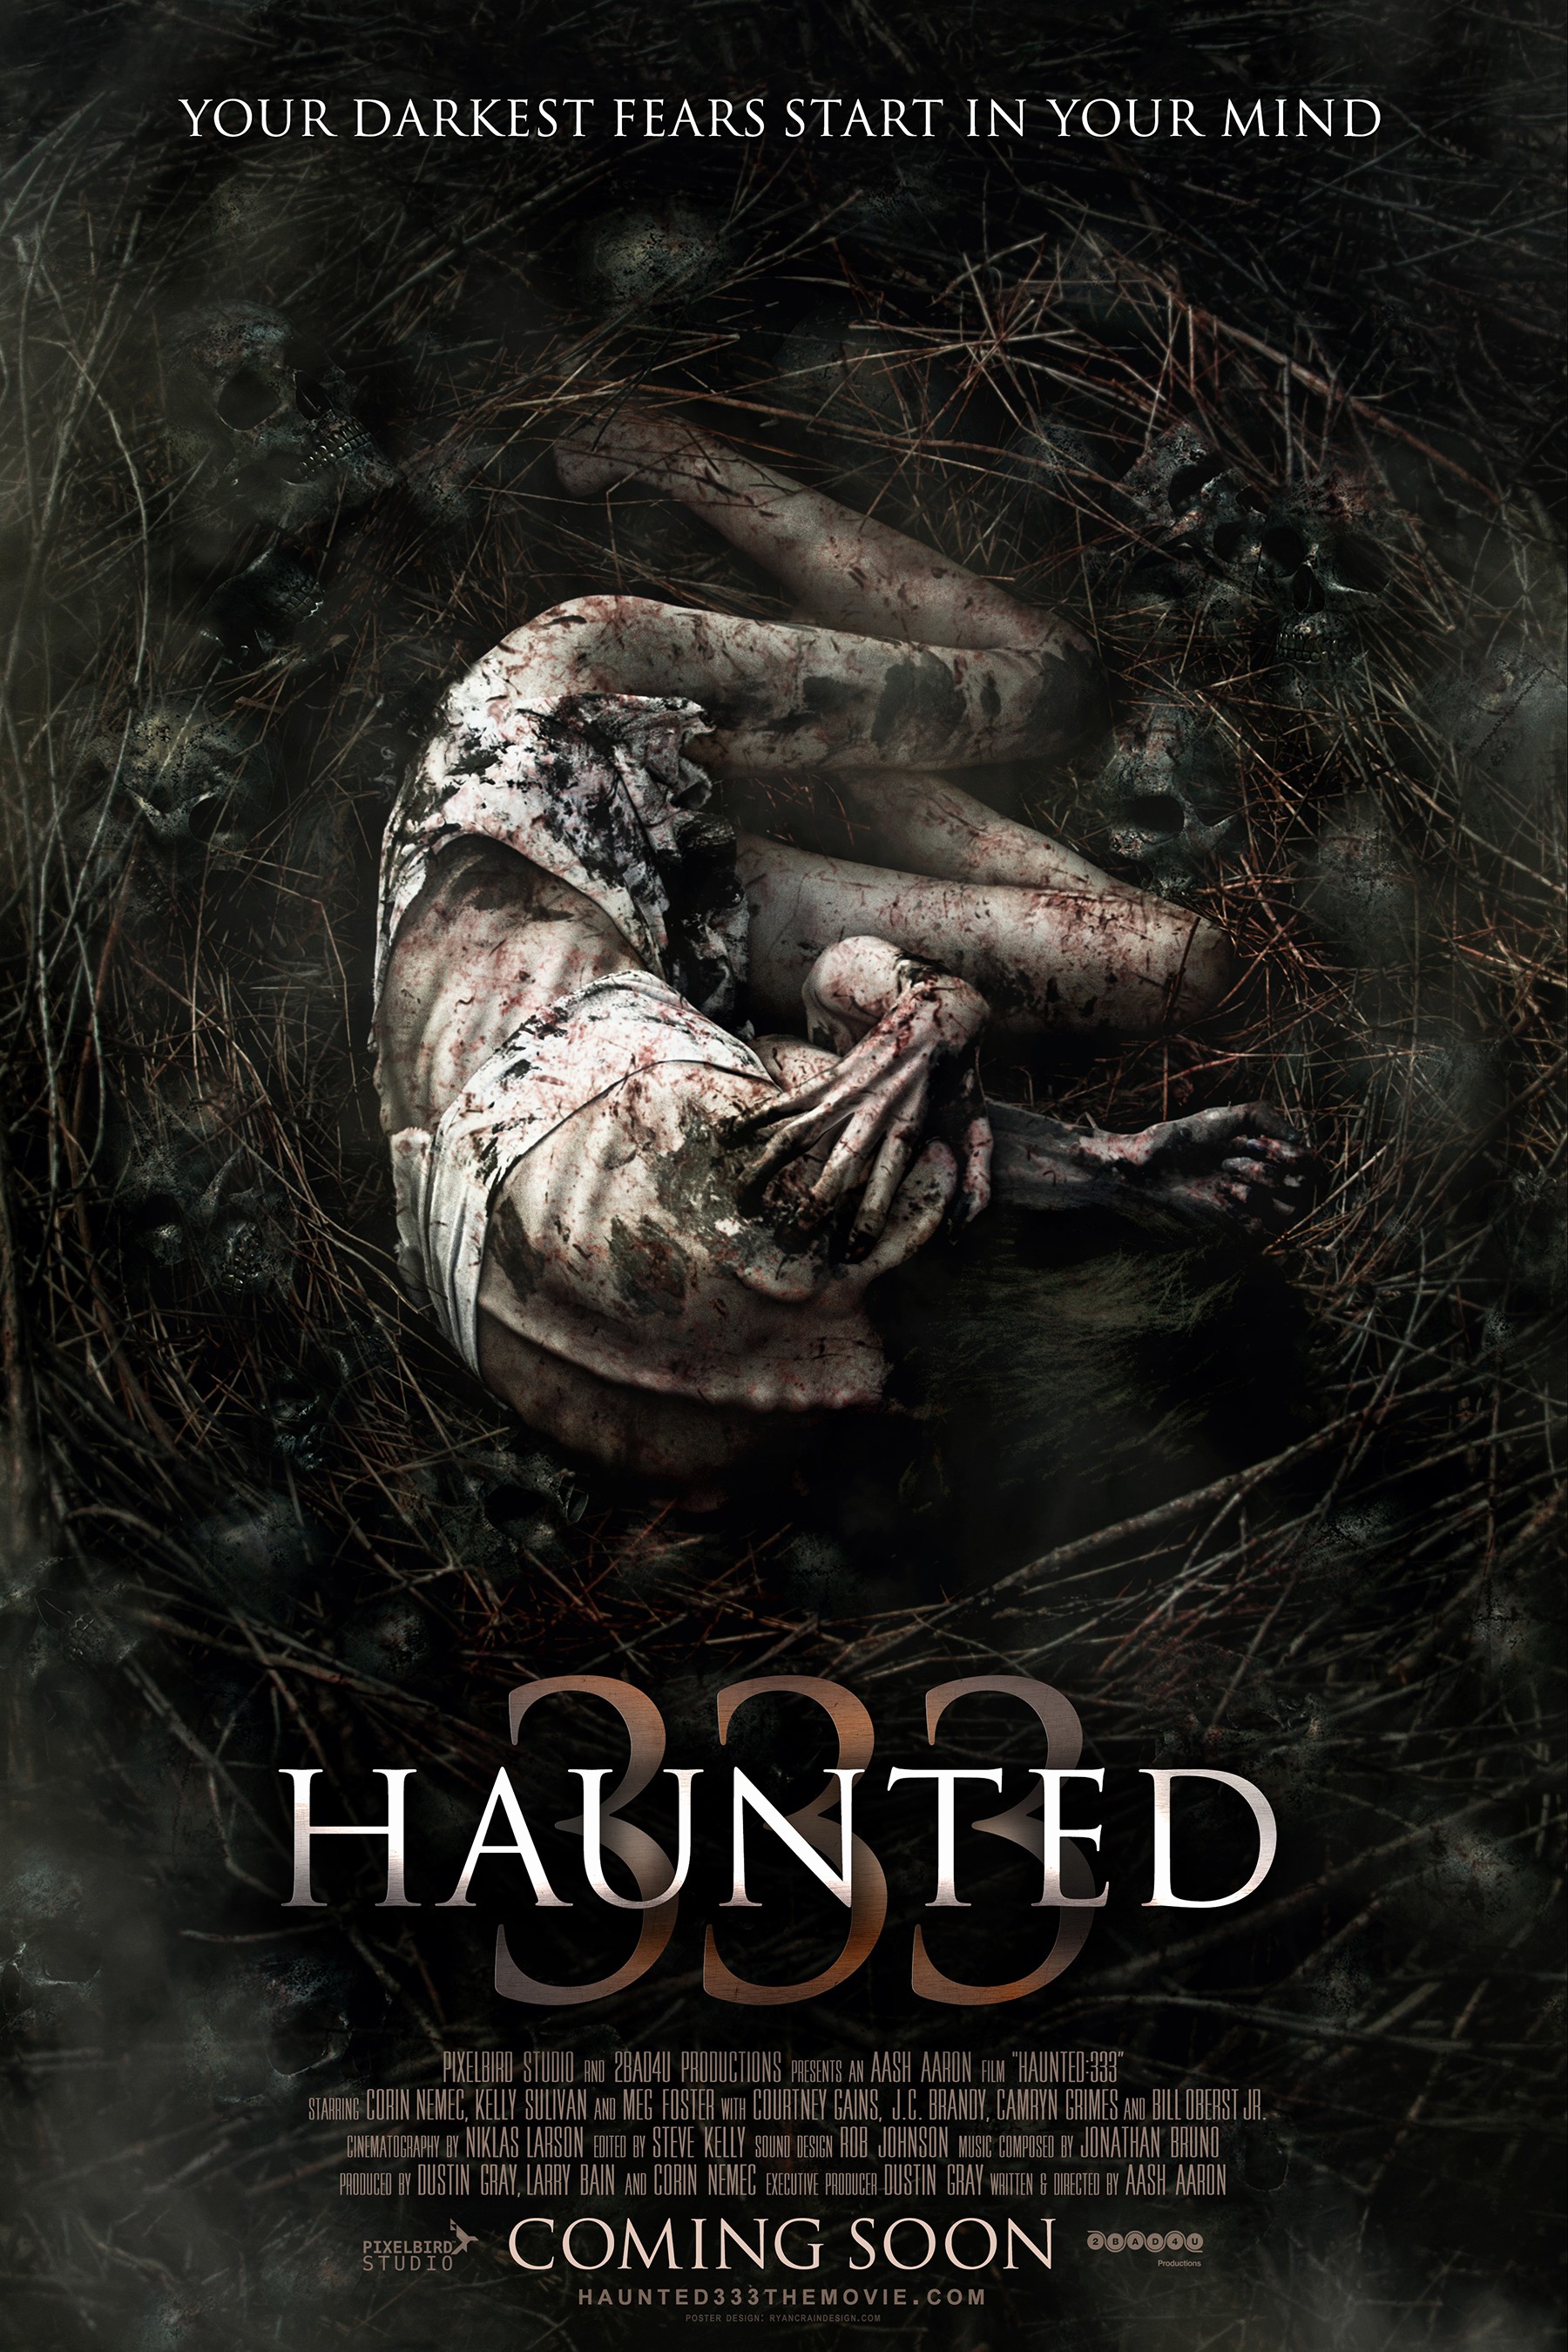 Mega Sized Movie Poster Image for Haunted: 333 